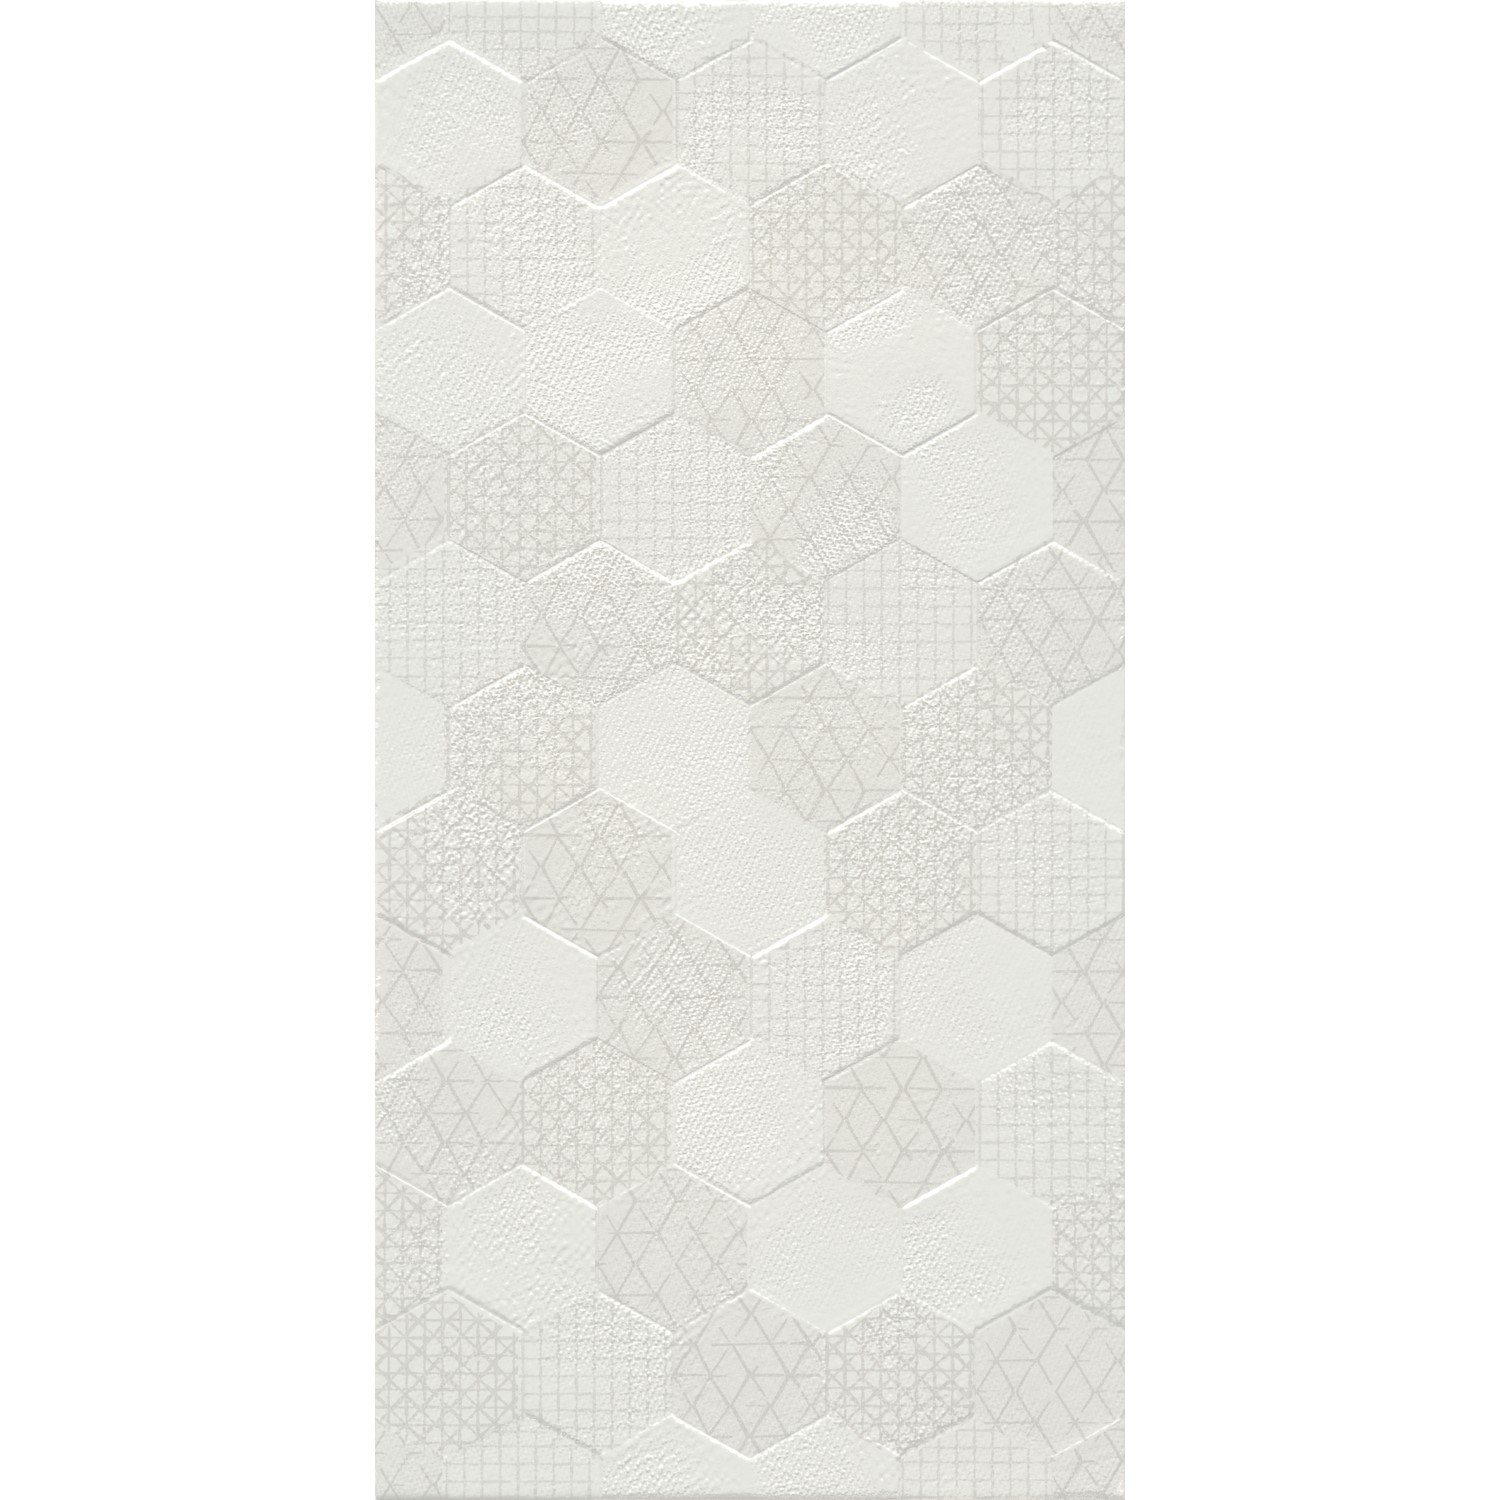 White Linen Effect Dcor Wall Tile 30 x 60cm - Modello